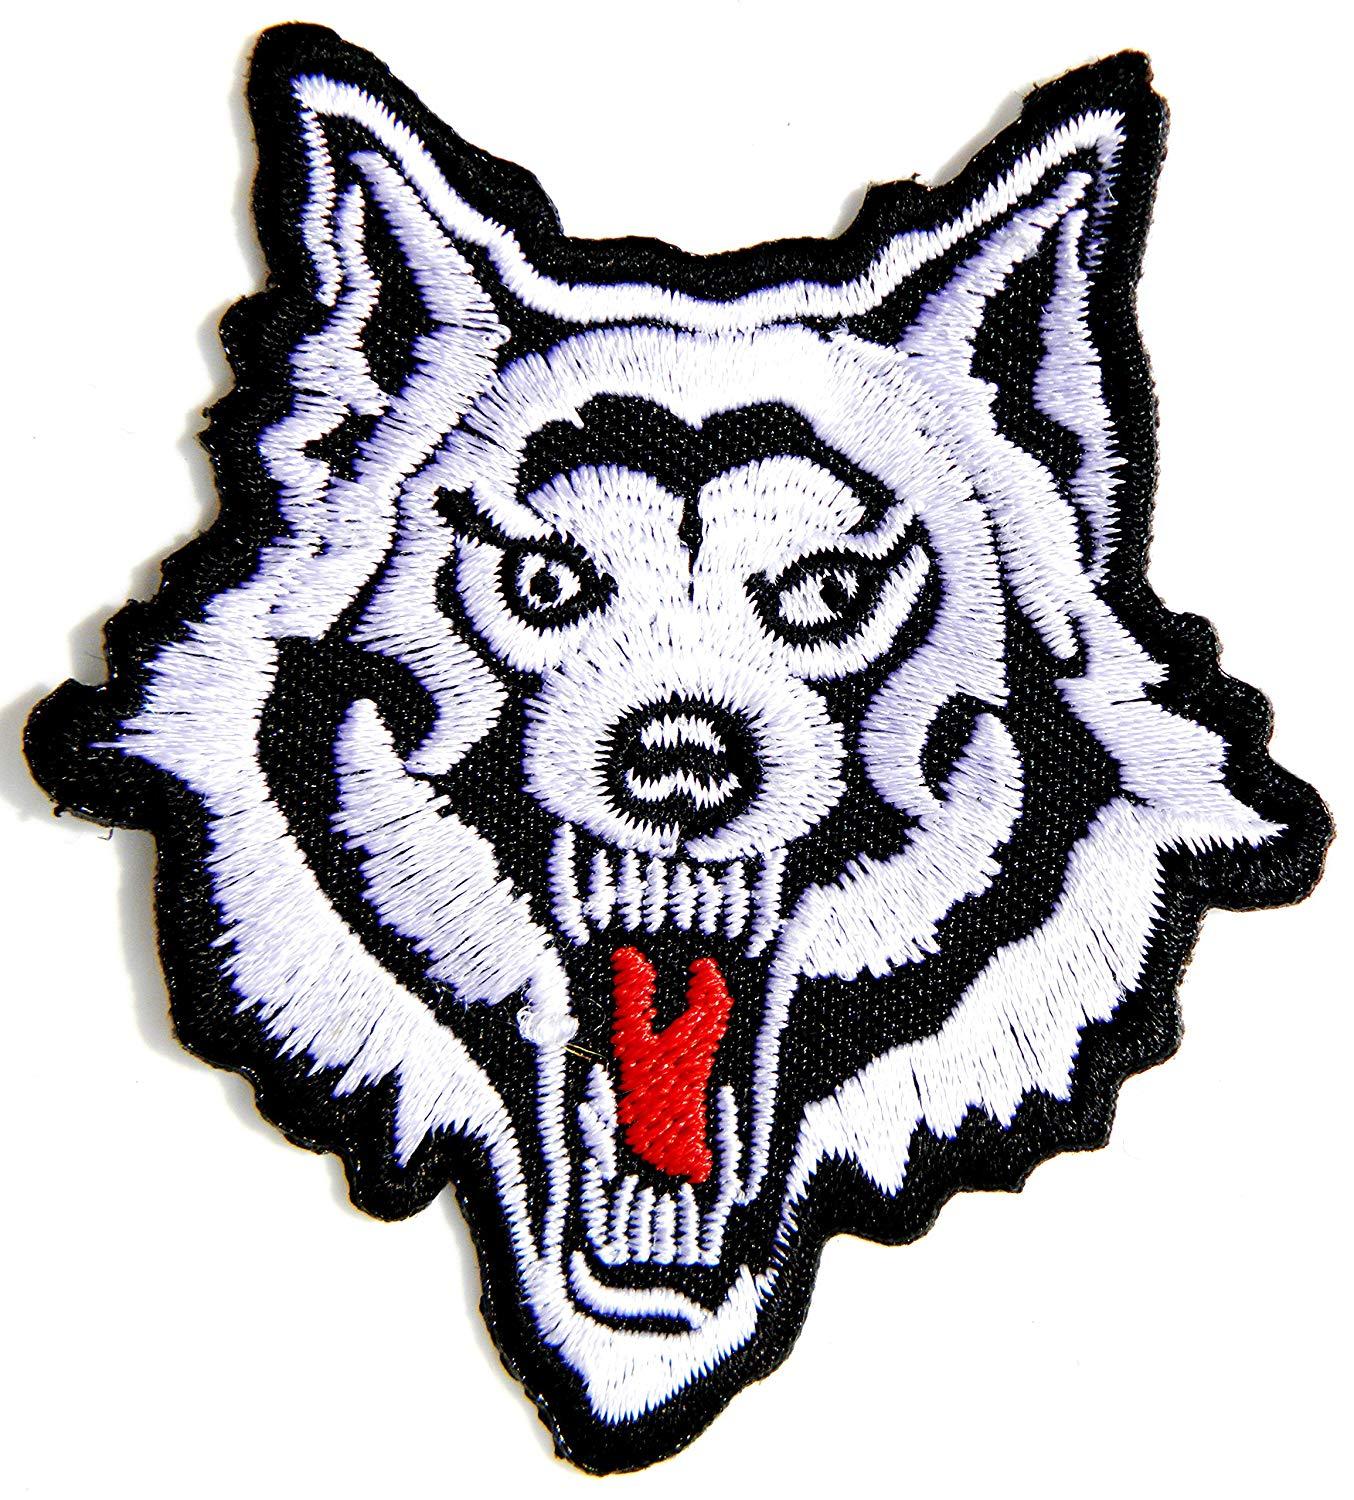 Hippie Dog Logo - Amazon.com: Wolf Fox Dog Logo Racing Biker Rider Hippie Punk Rock ...